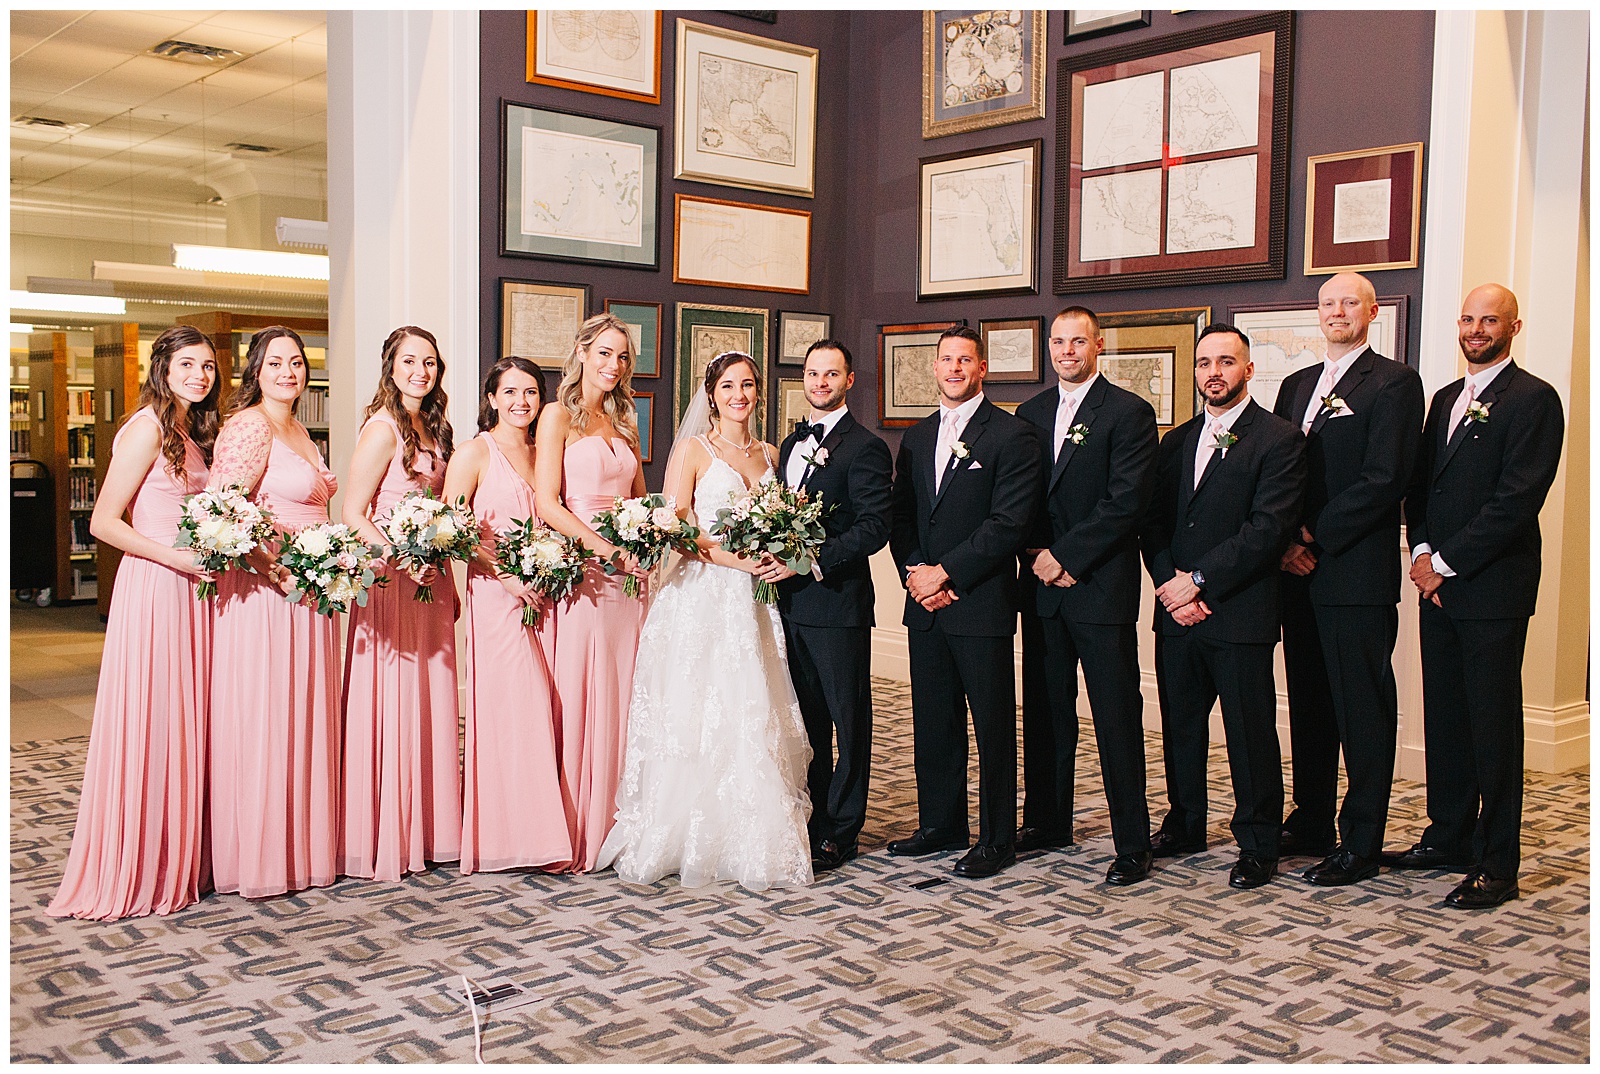 blush bridesmaids and groomsmen - rose color bridesmaid dresses